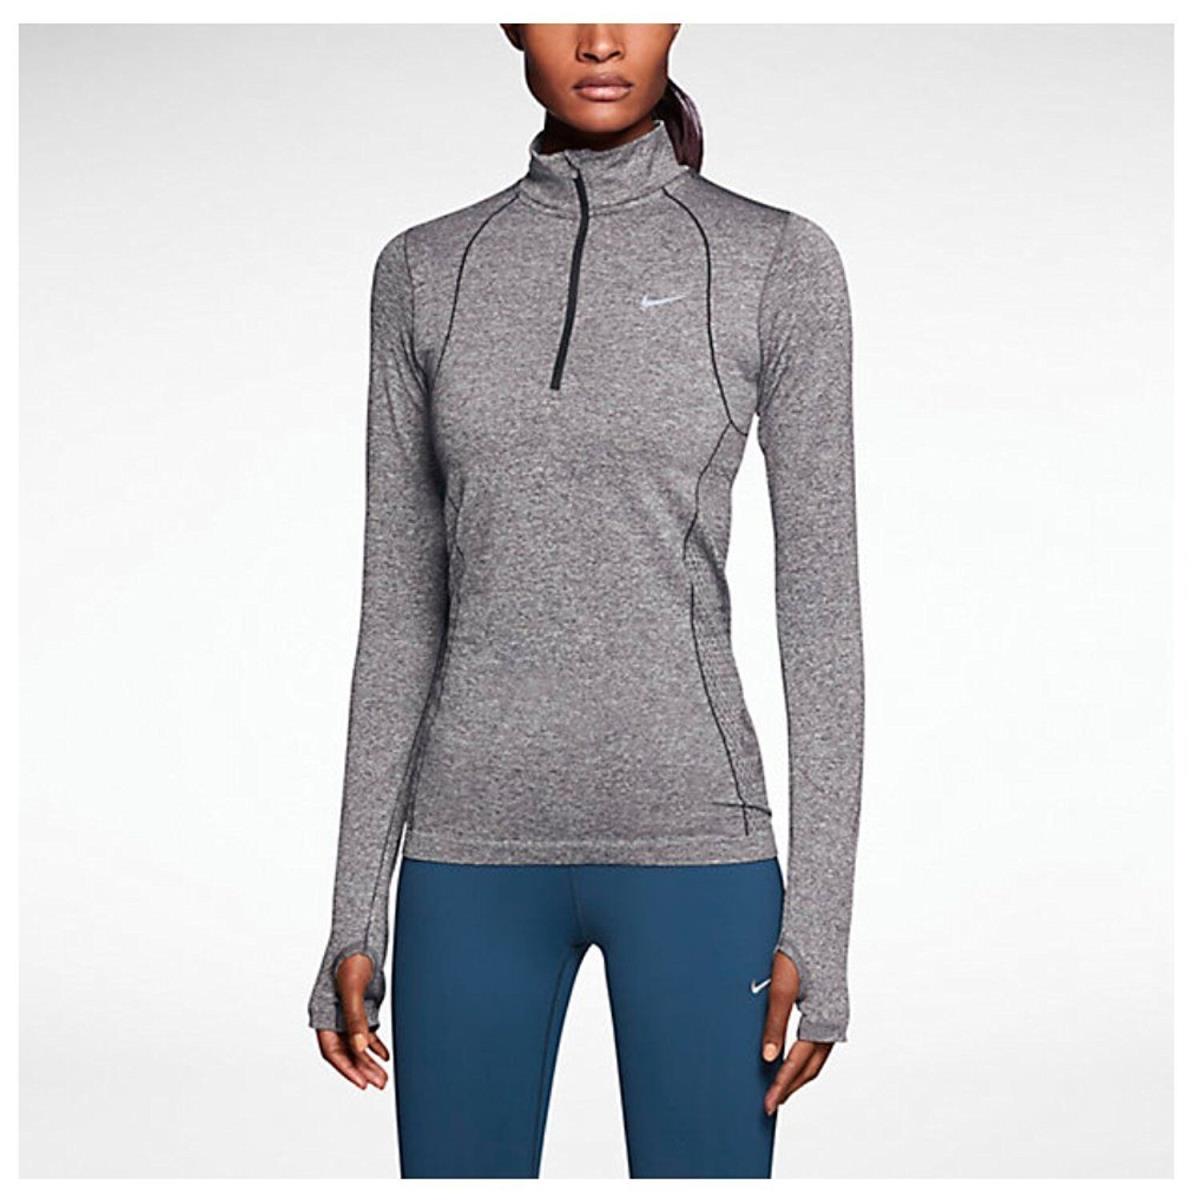 Nike Womens Athletic Shirt Knit Long Sleeve - XL 588534-032 Grey/black, 640135573132 - Nike clothing - Gray